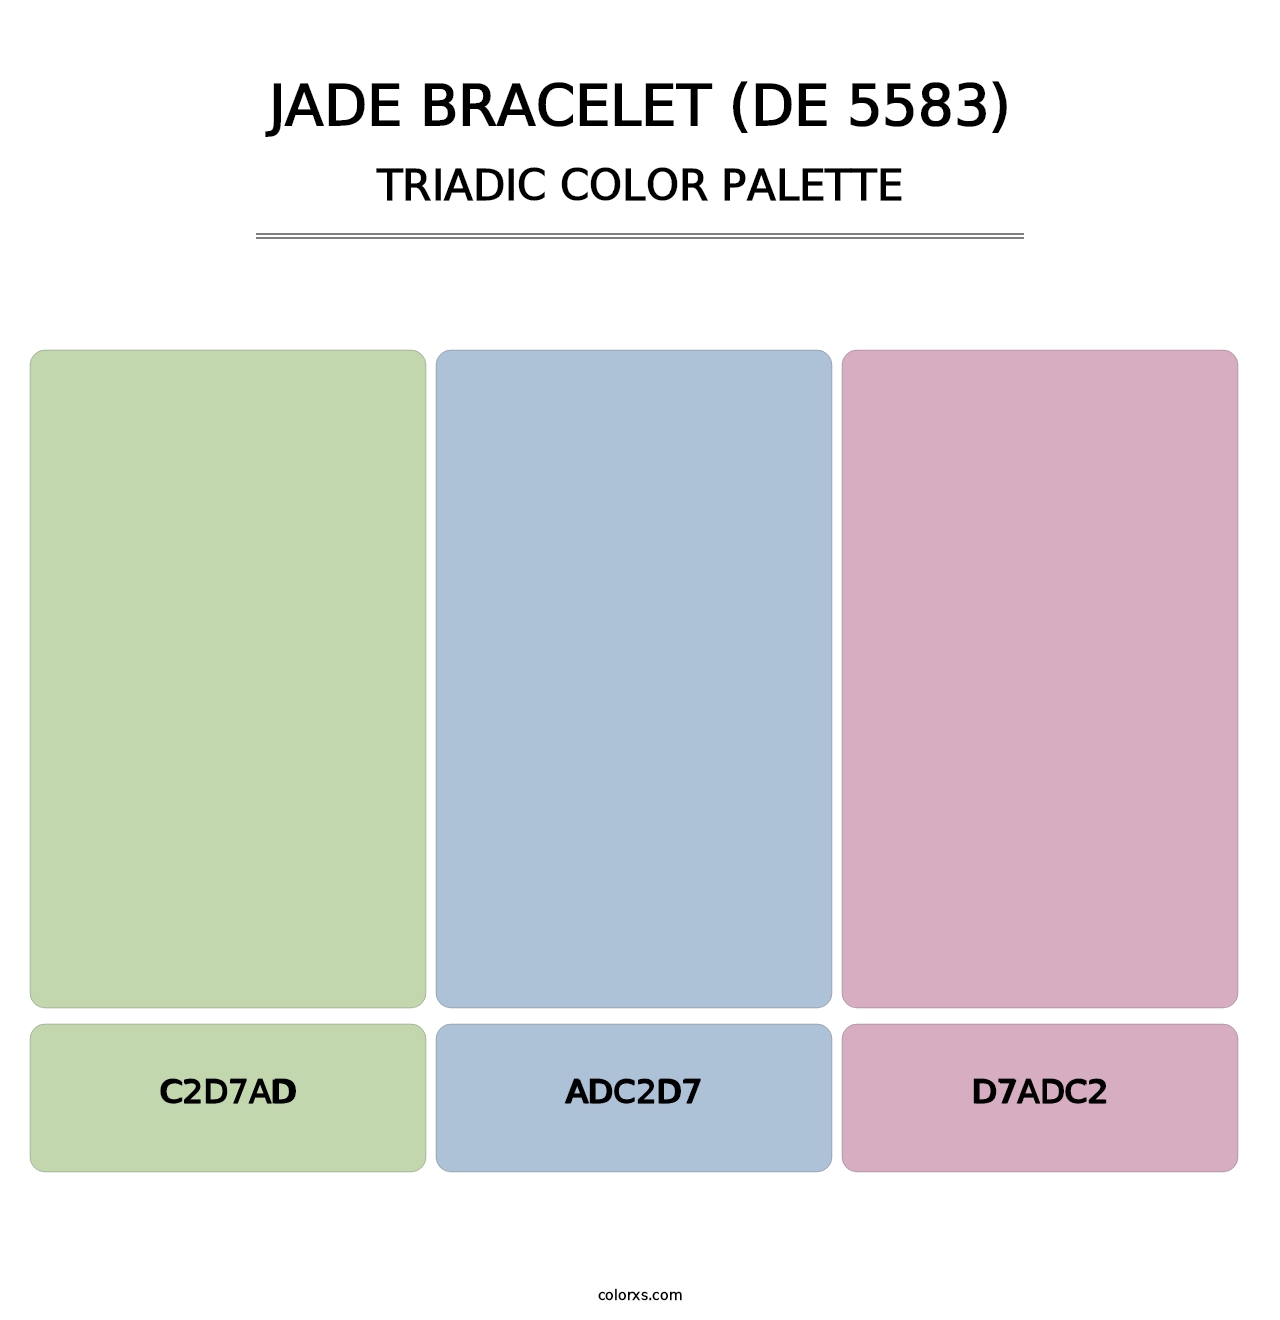 Jade Bracelet (DE 5583) - Triadic Color Palette